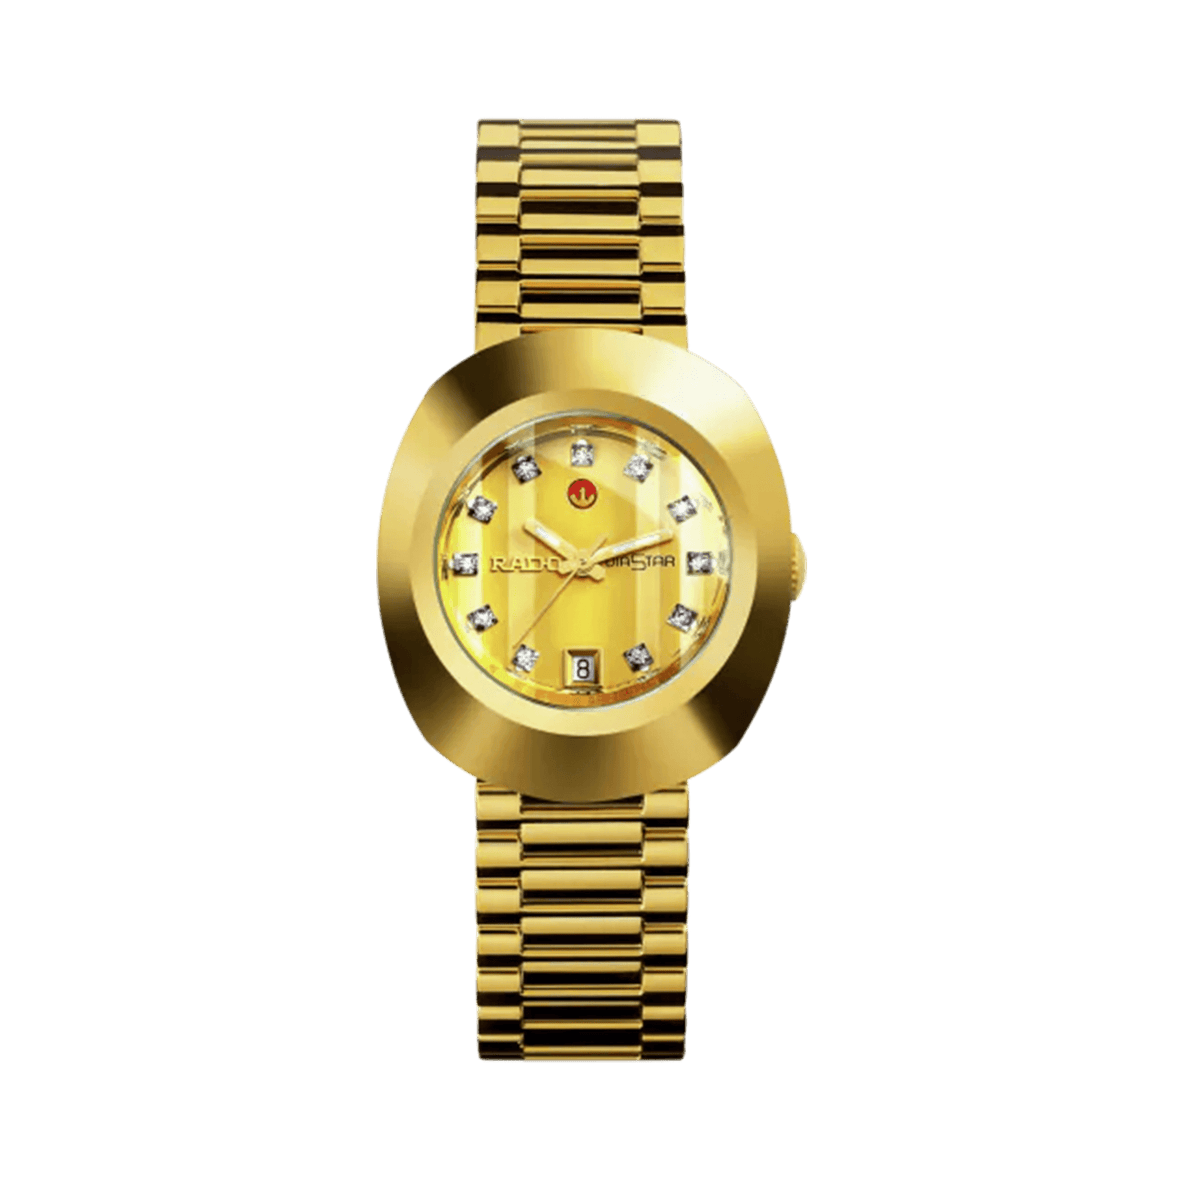 Rado Original Women's 27mm Gold PVD Automatic Watch R12416633 - Wallace Bishop